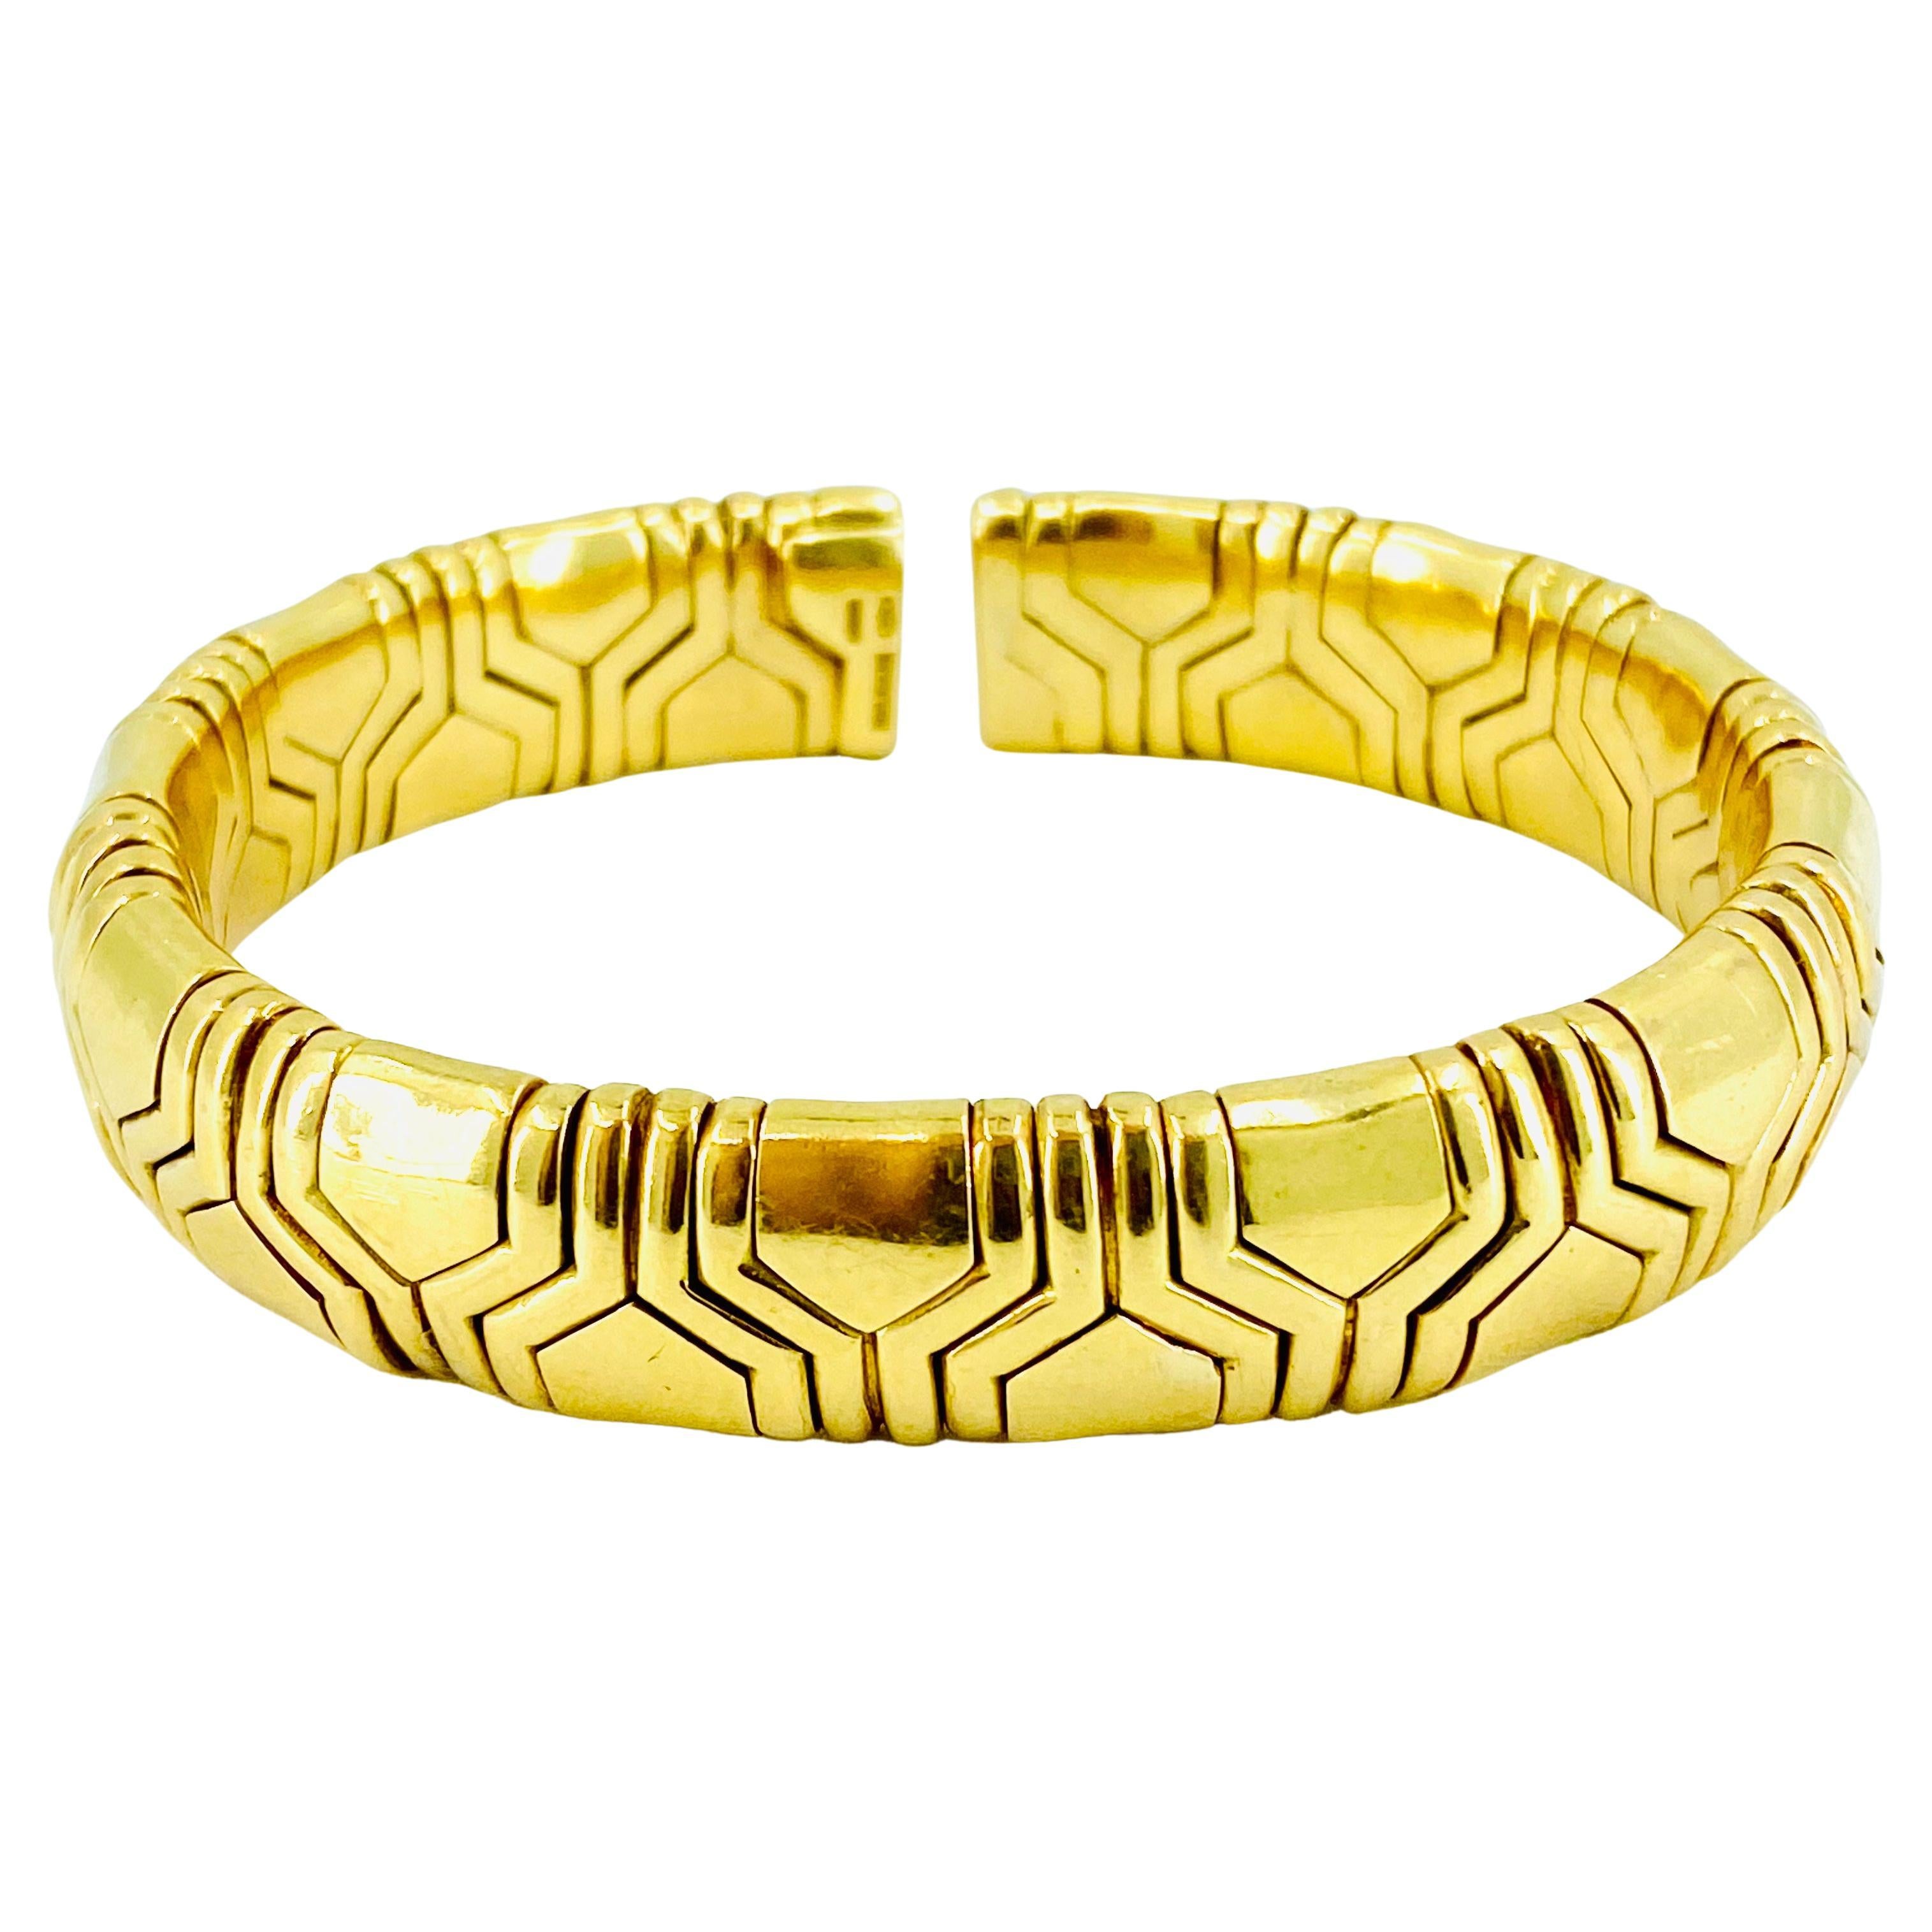 Bvlgari - 18 Karat Signature 5 Circle Link Bracelet 21 Grams Onyx Gold